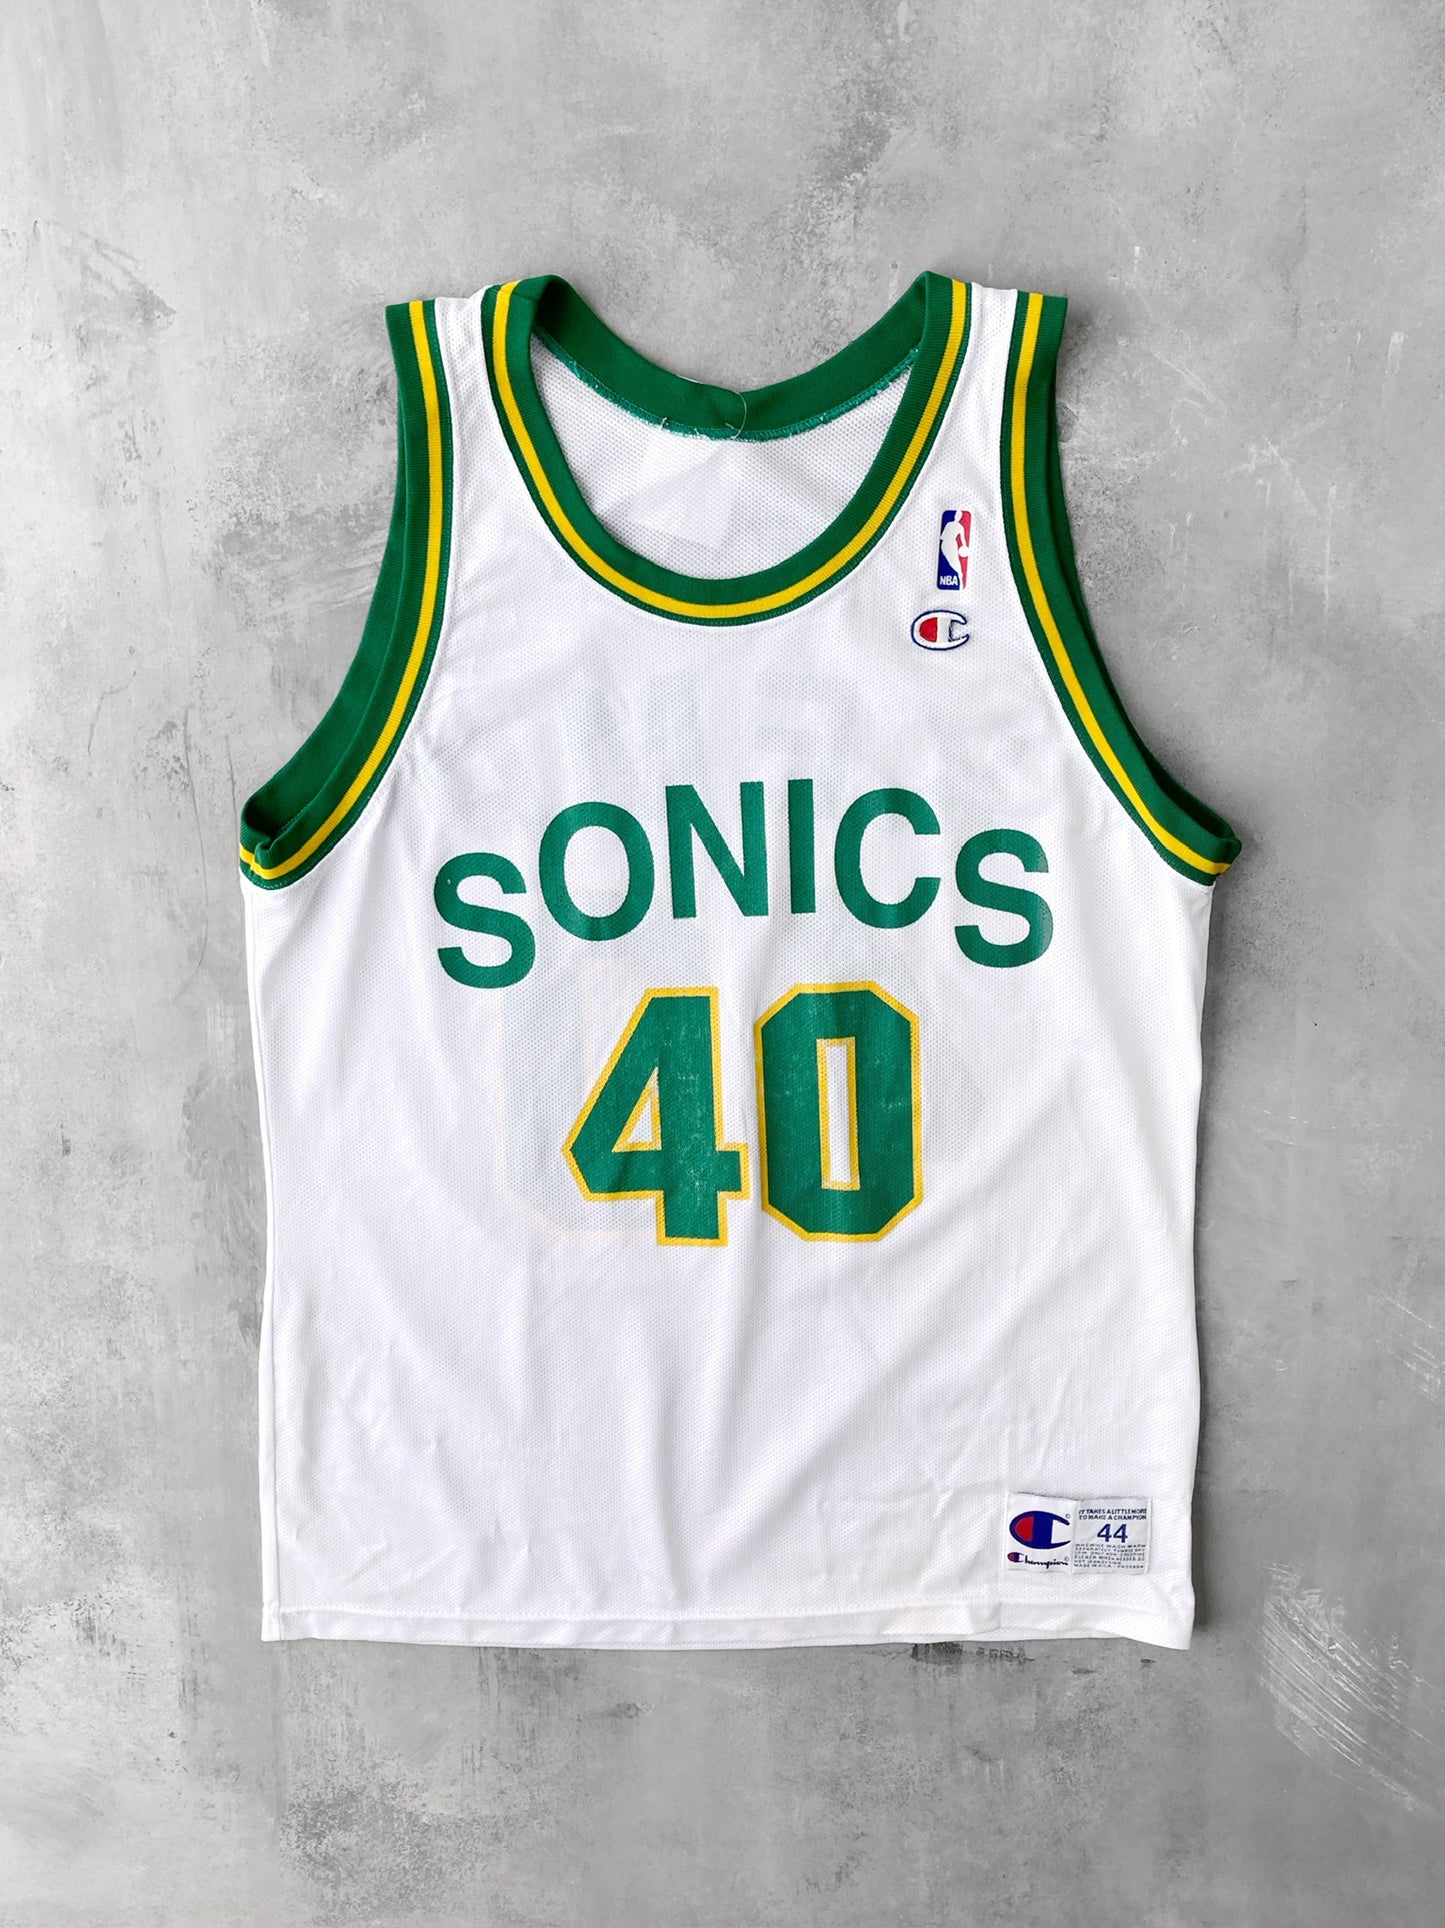 Seattle Sonics Jersey 90's - Large (44)